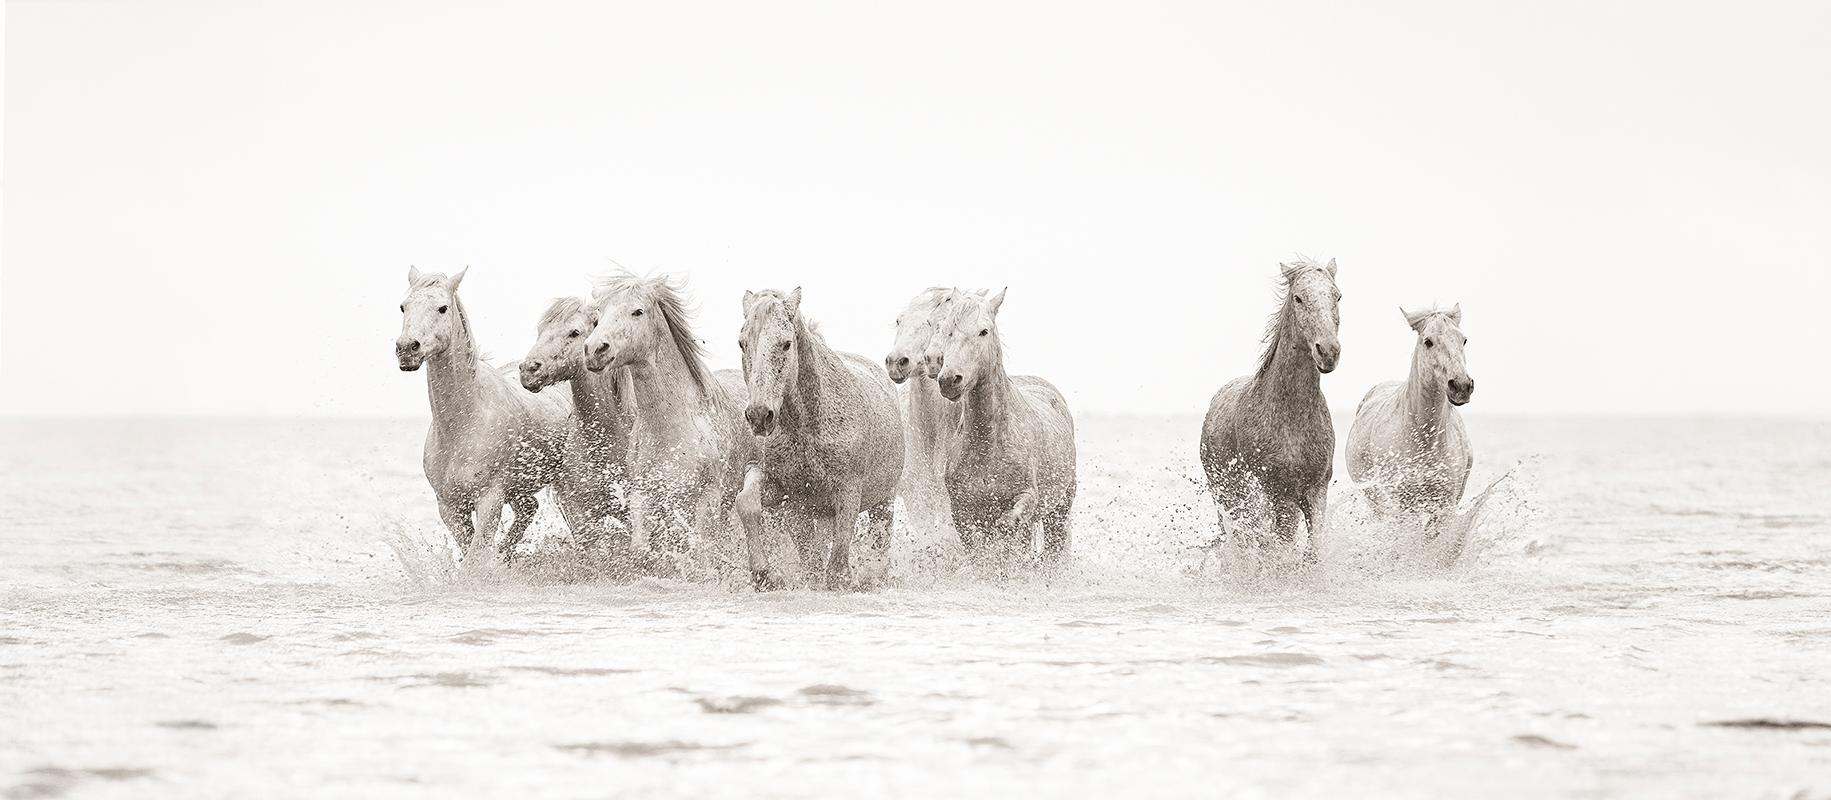 Tori Gagne Black and White Photograph - "Les Amis" Contemporary Wild Horse Photograph, 18" x 41"